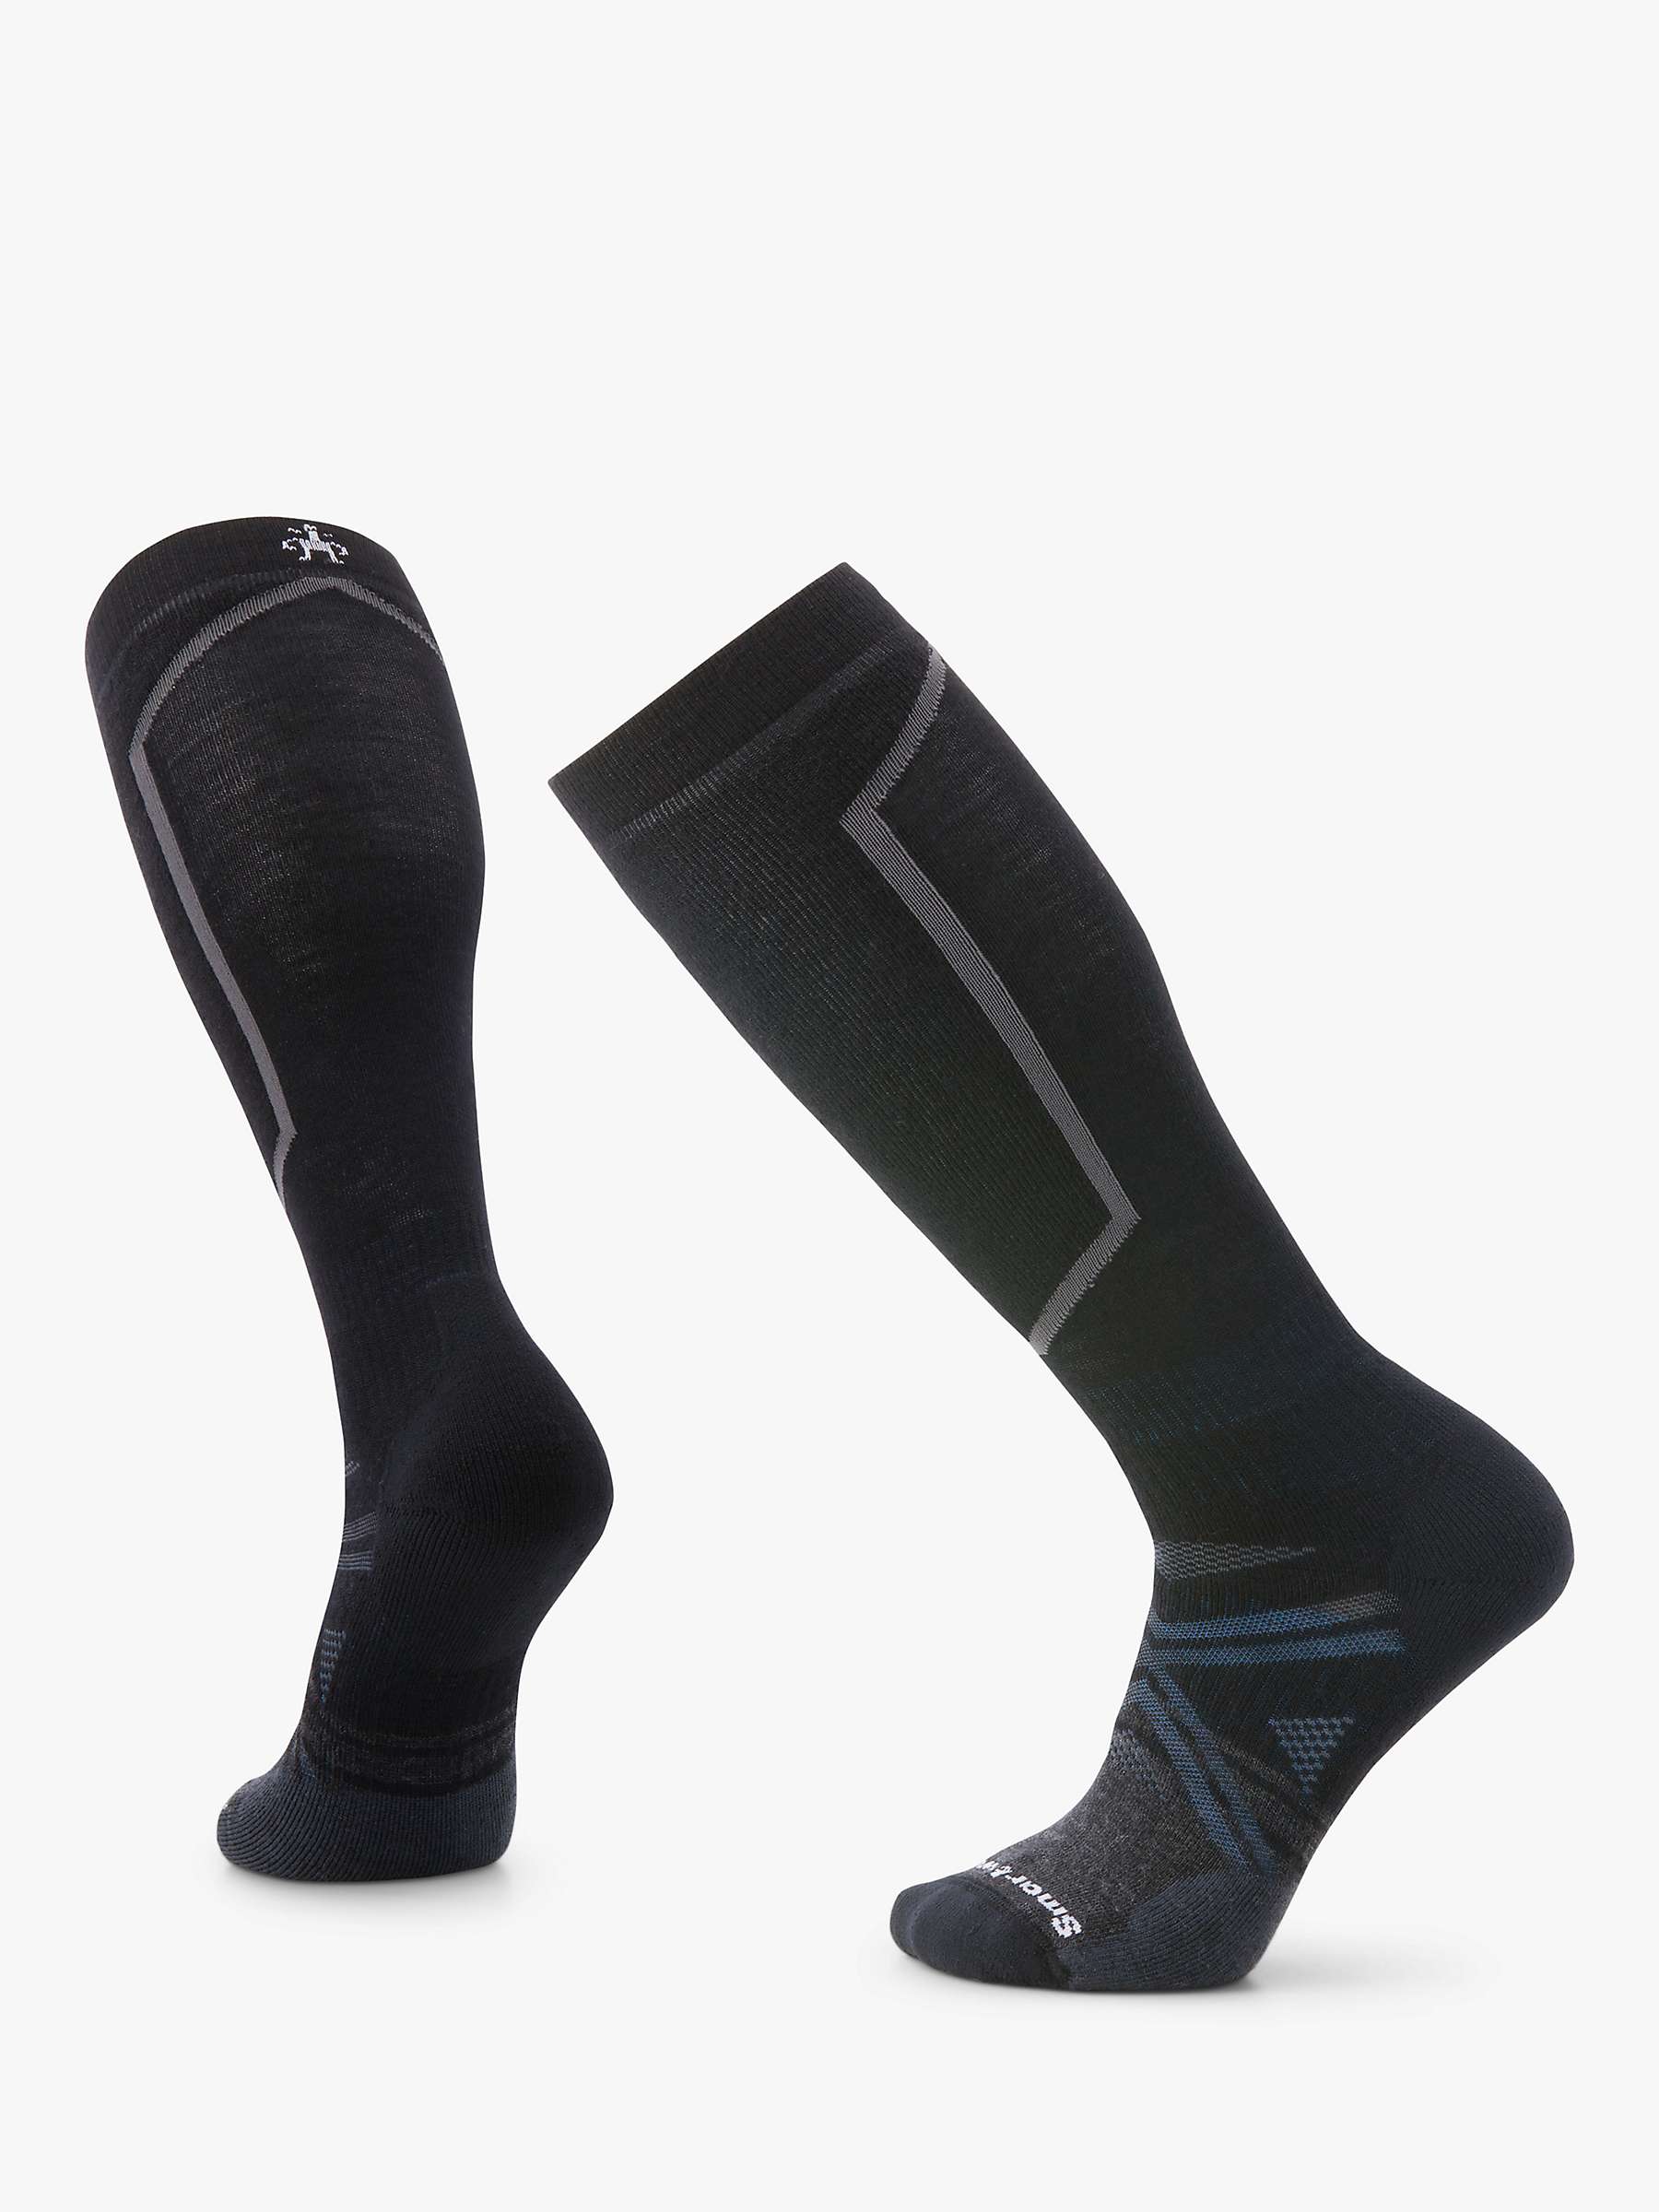 Buy SmartWool Full Cushion Ski Socks Online at johnlewis.com